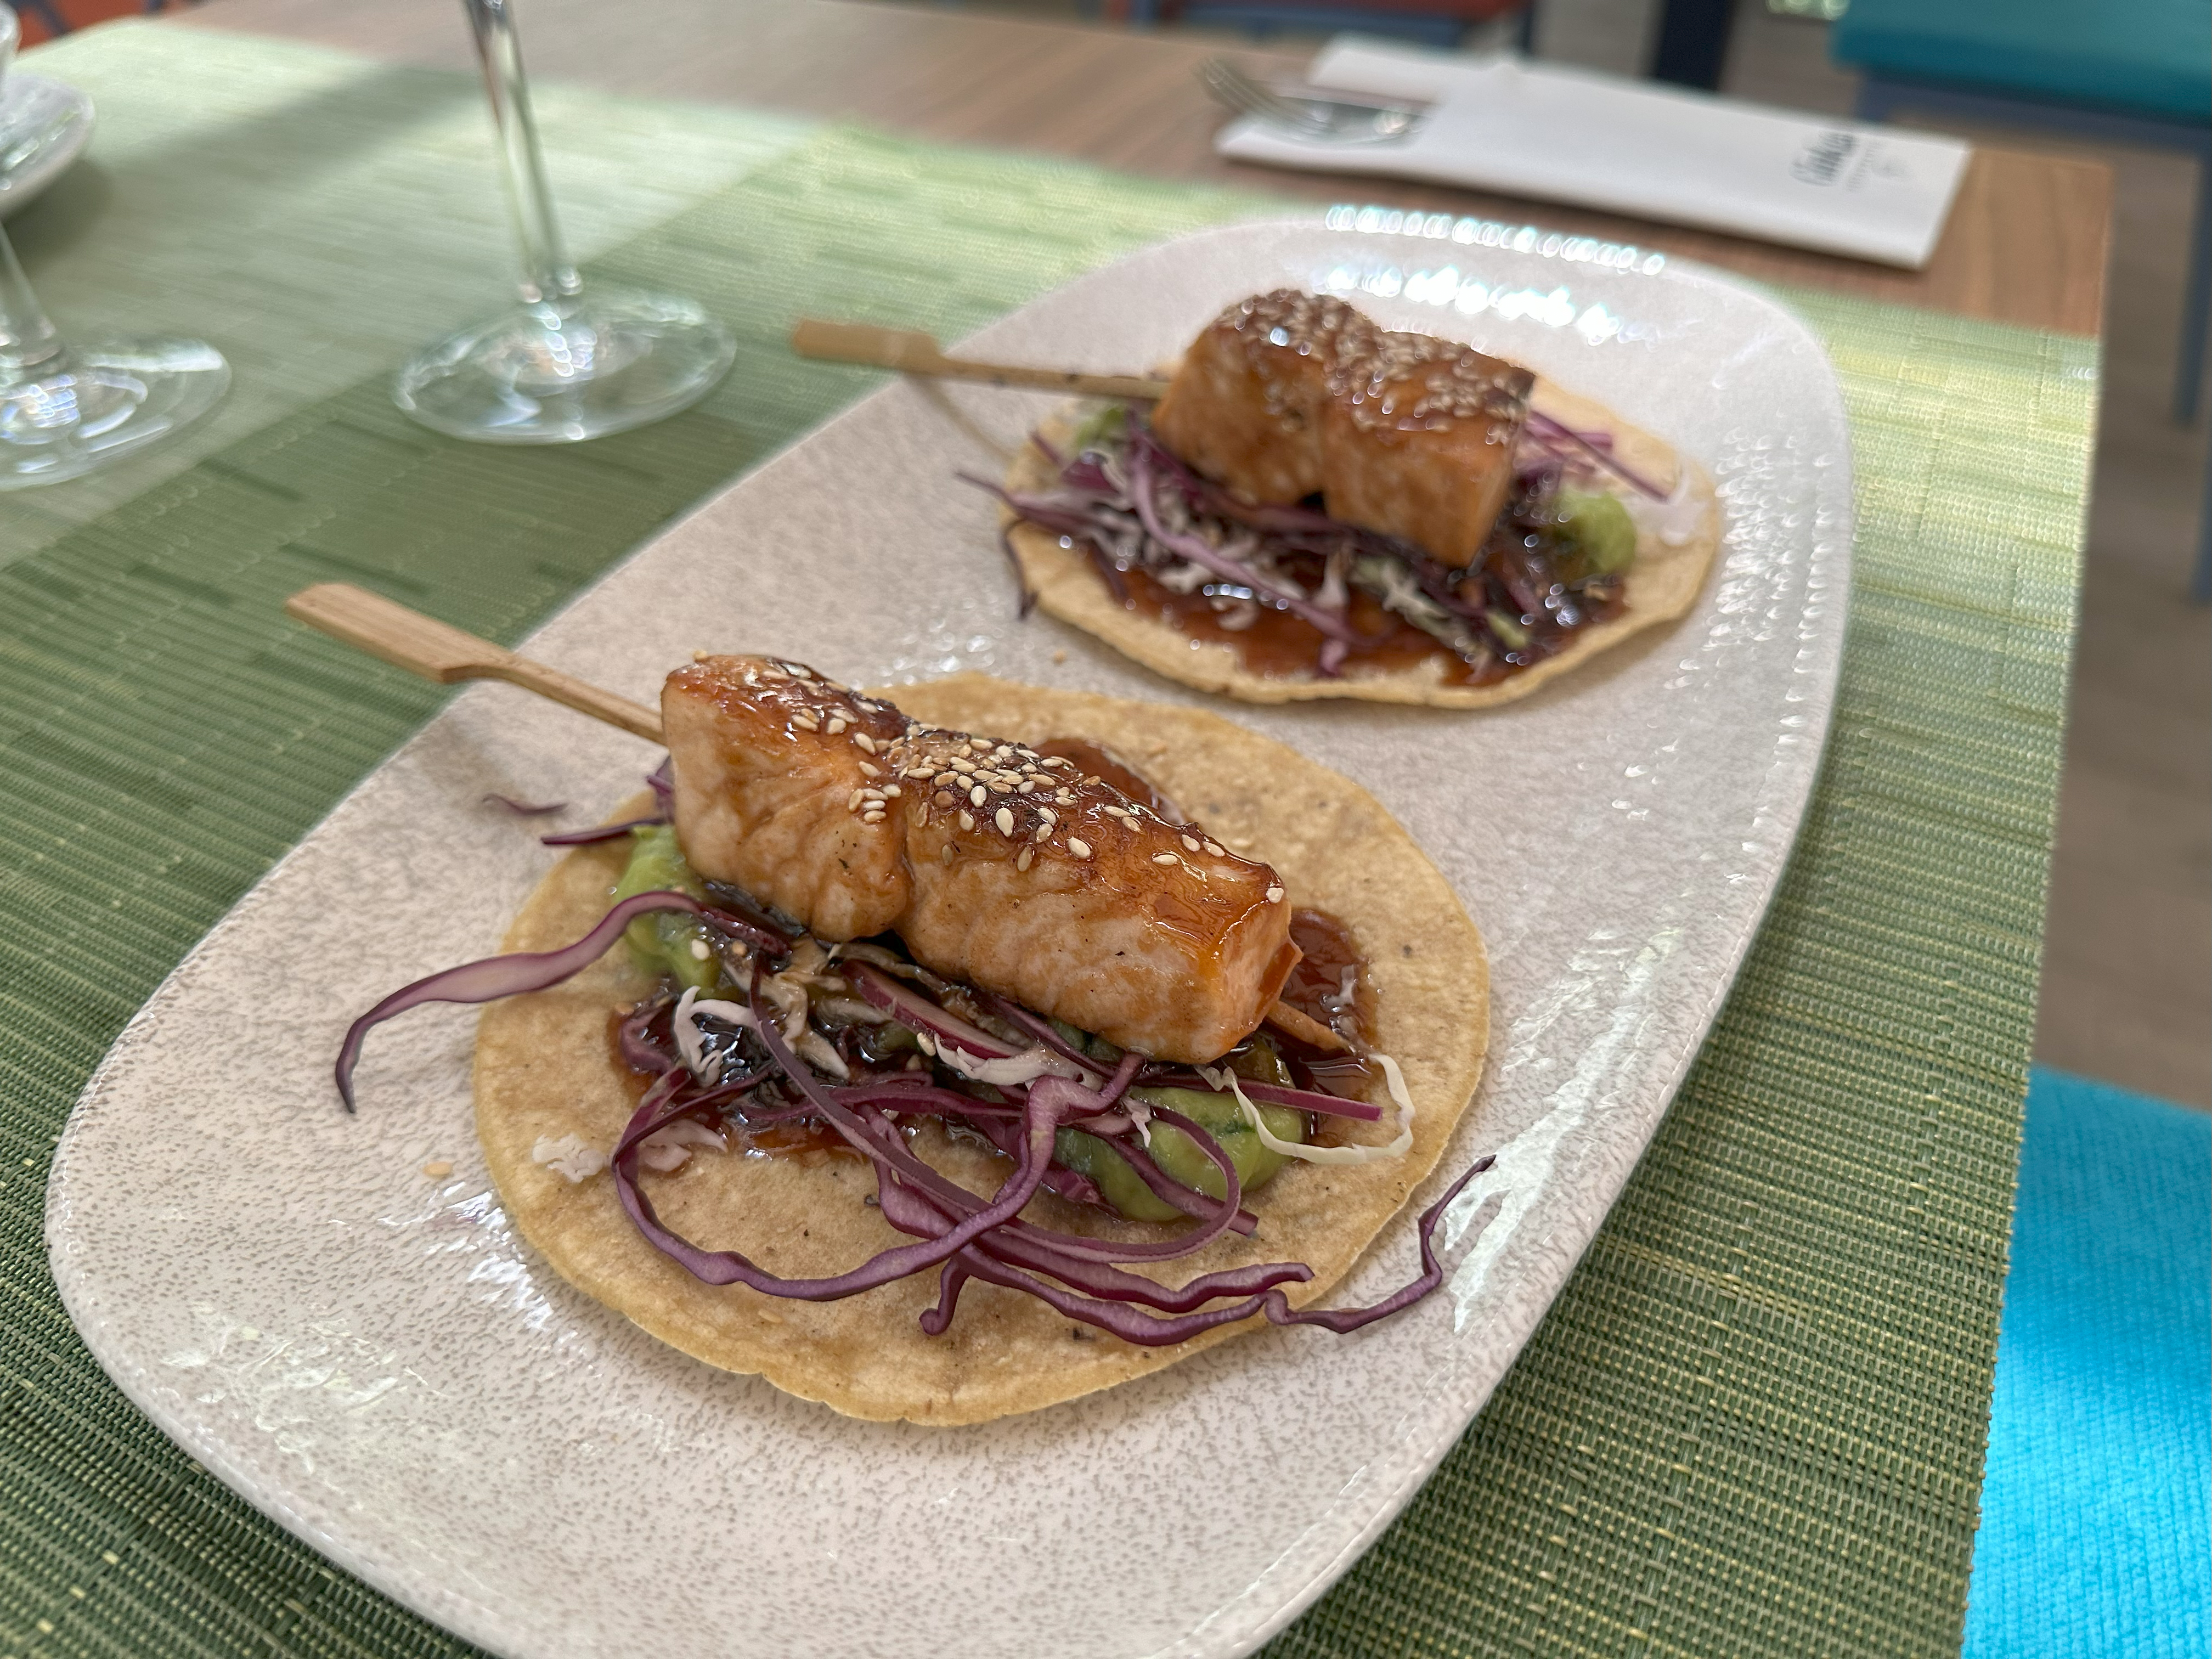 Mexican-style tacos with teriyaki salmon